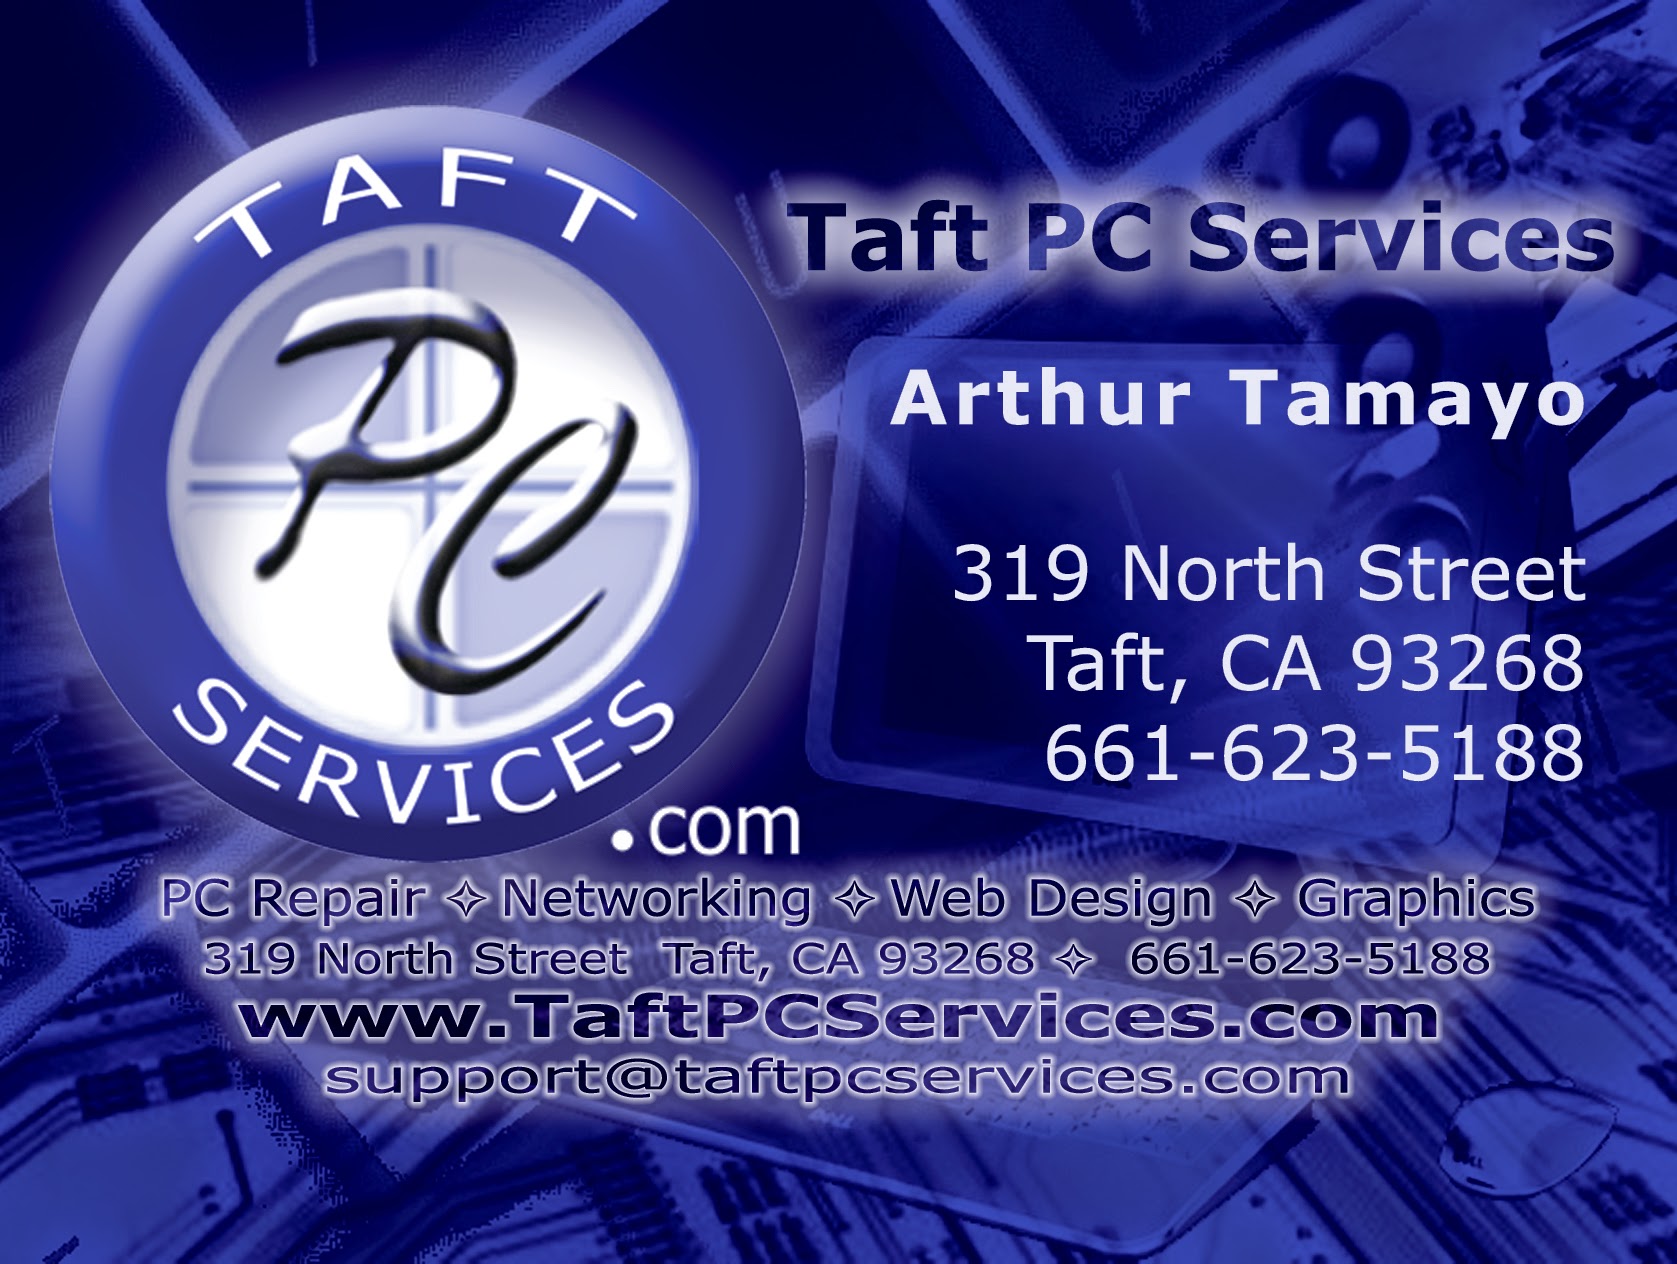 Taft PC Services